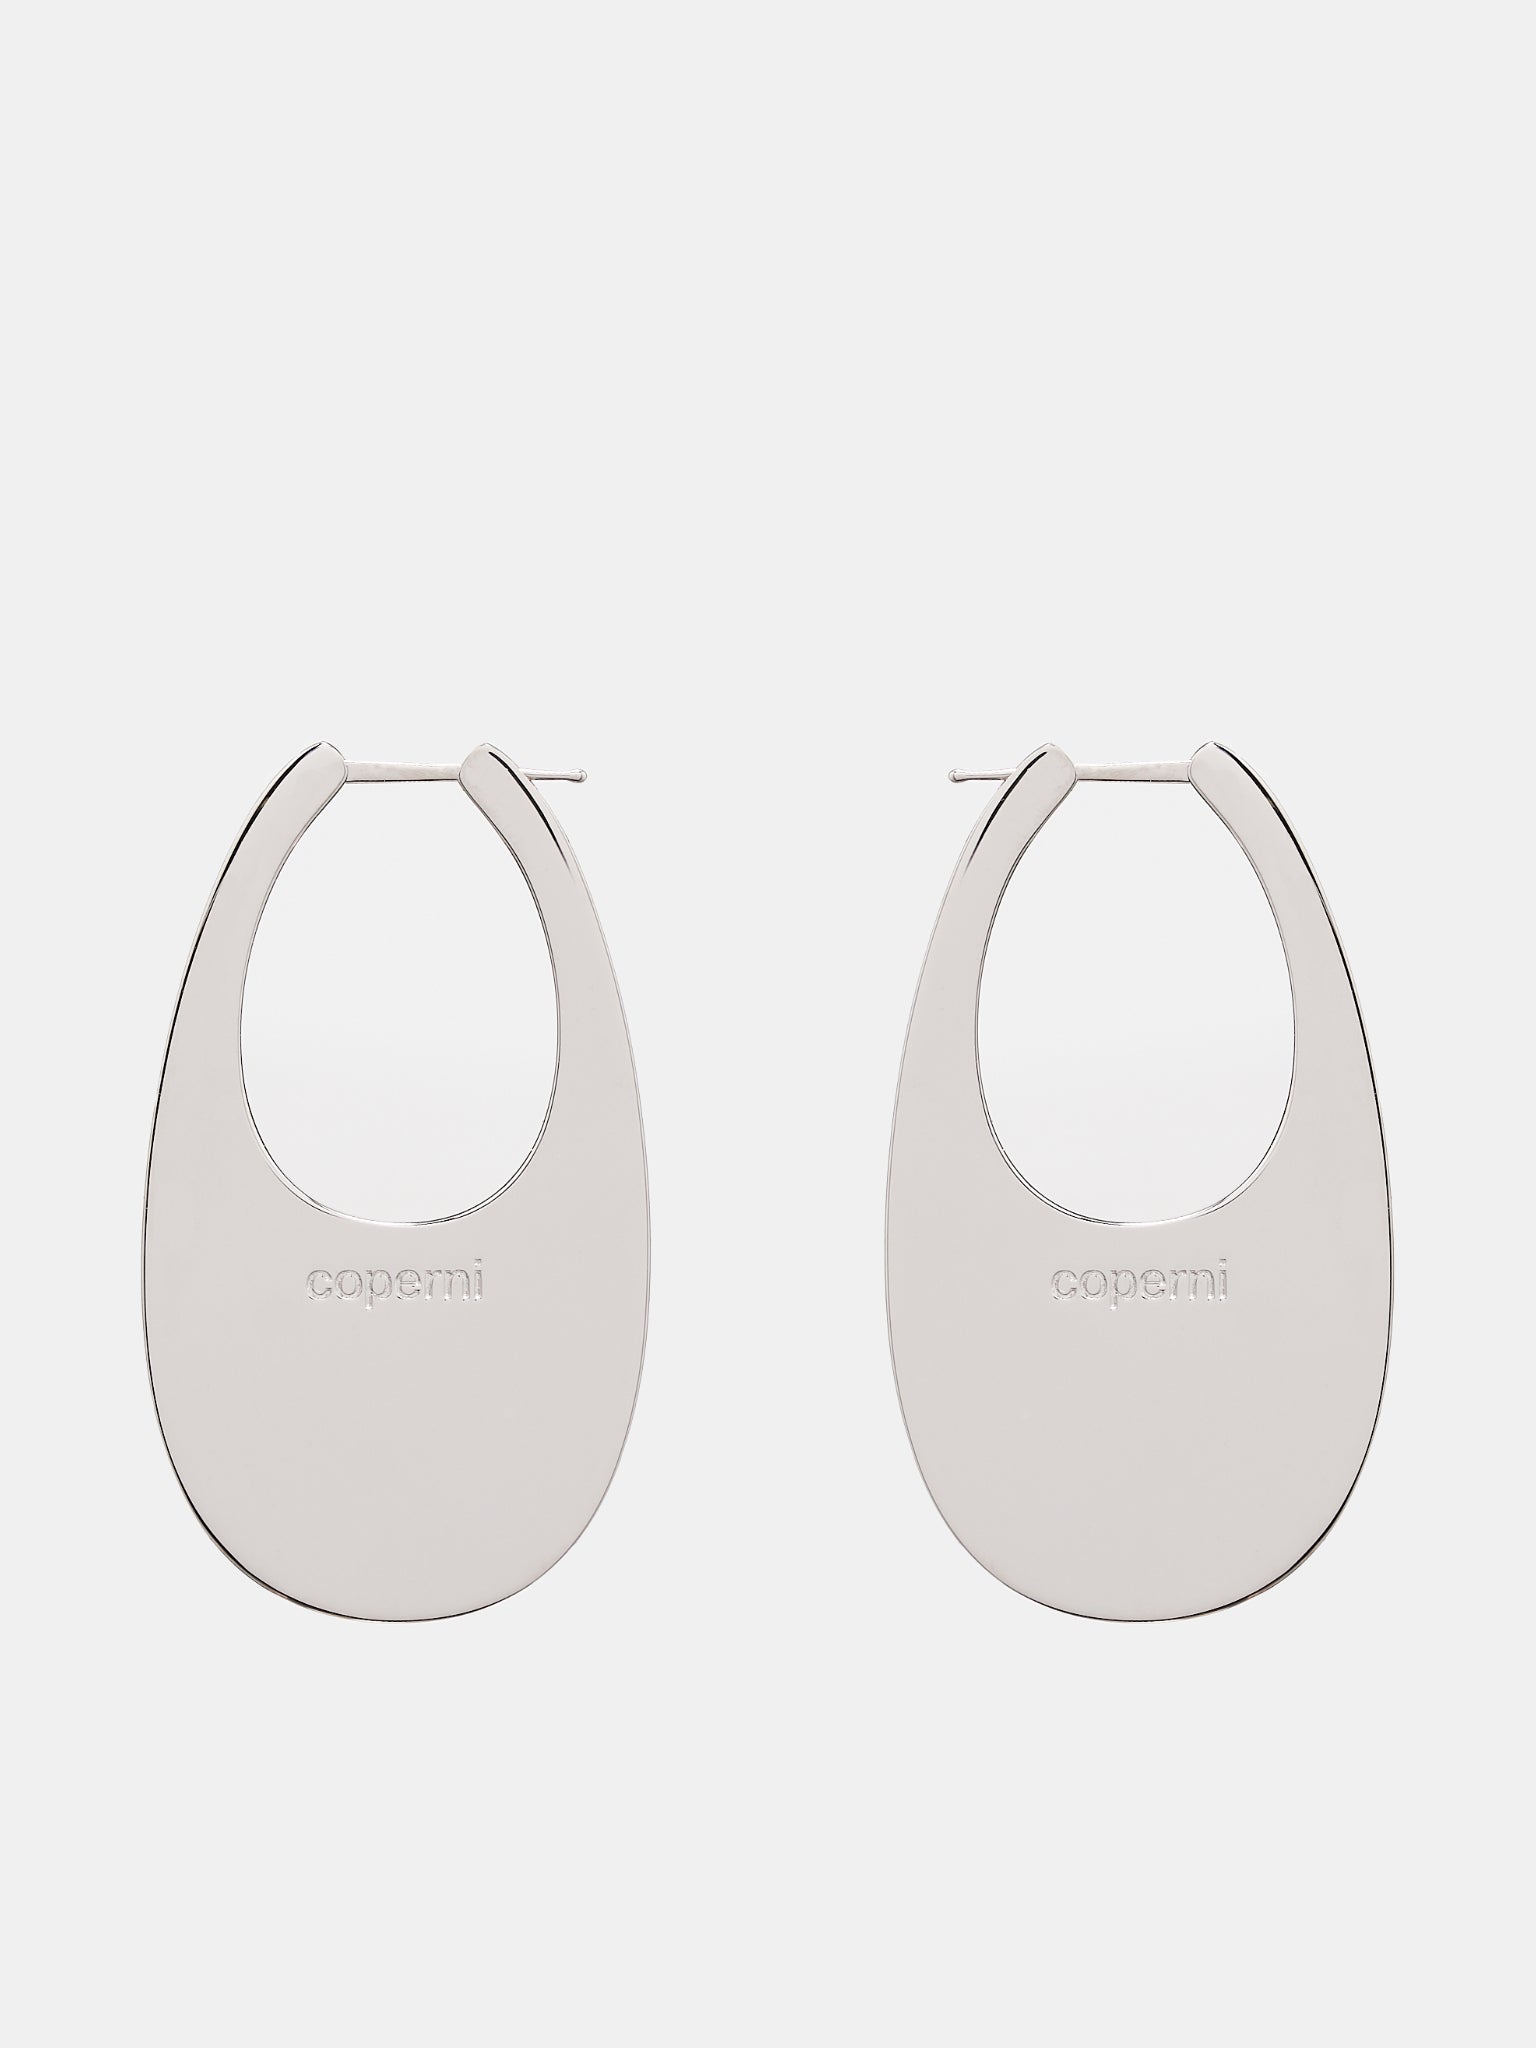 COPERNI Earrings | H.Lorenzo - front